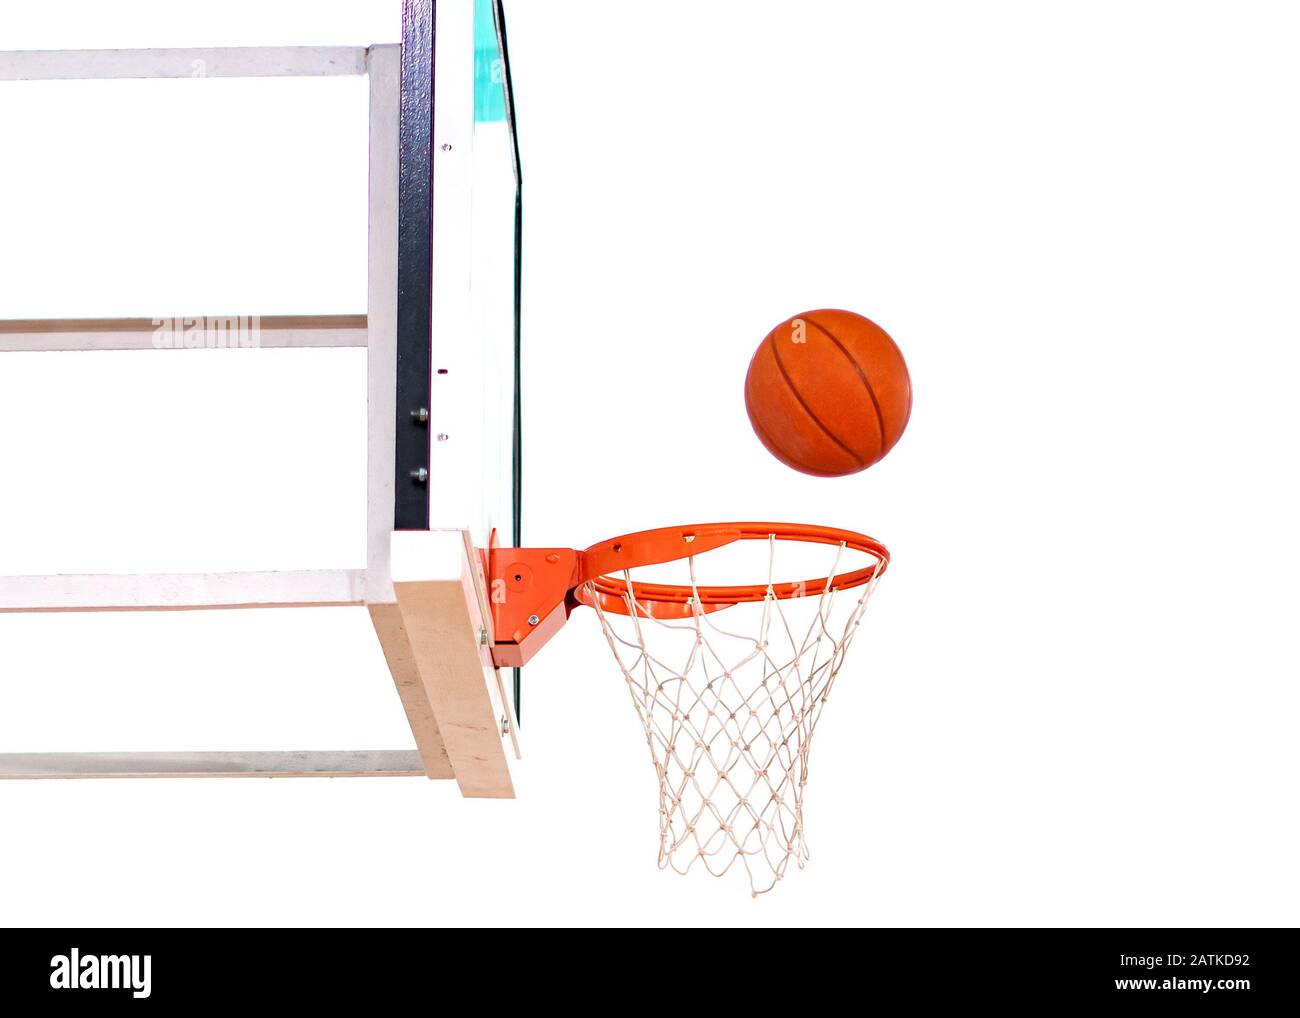 Basket ball inside the net isolated on white background Stock Photo